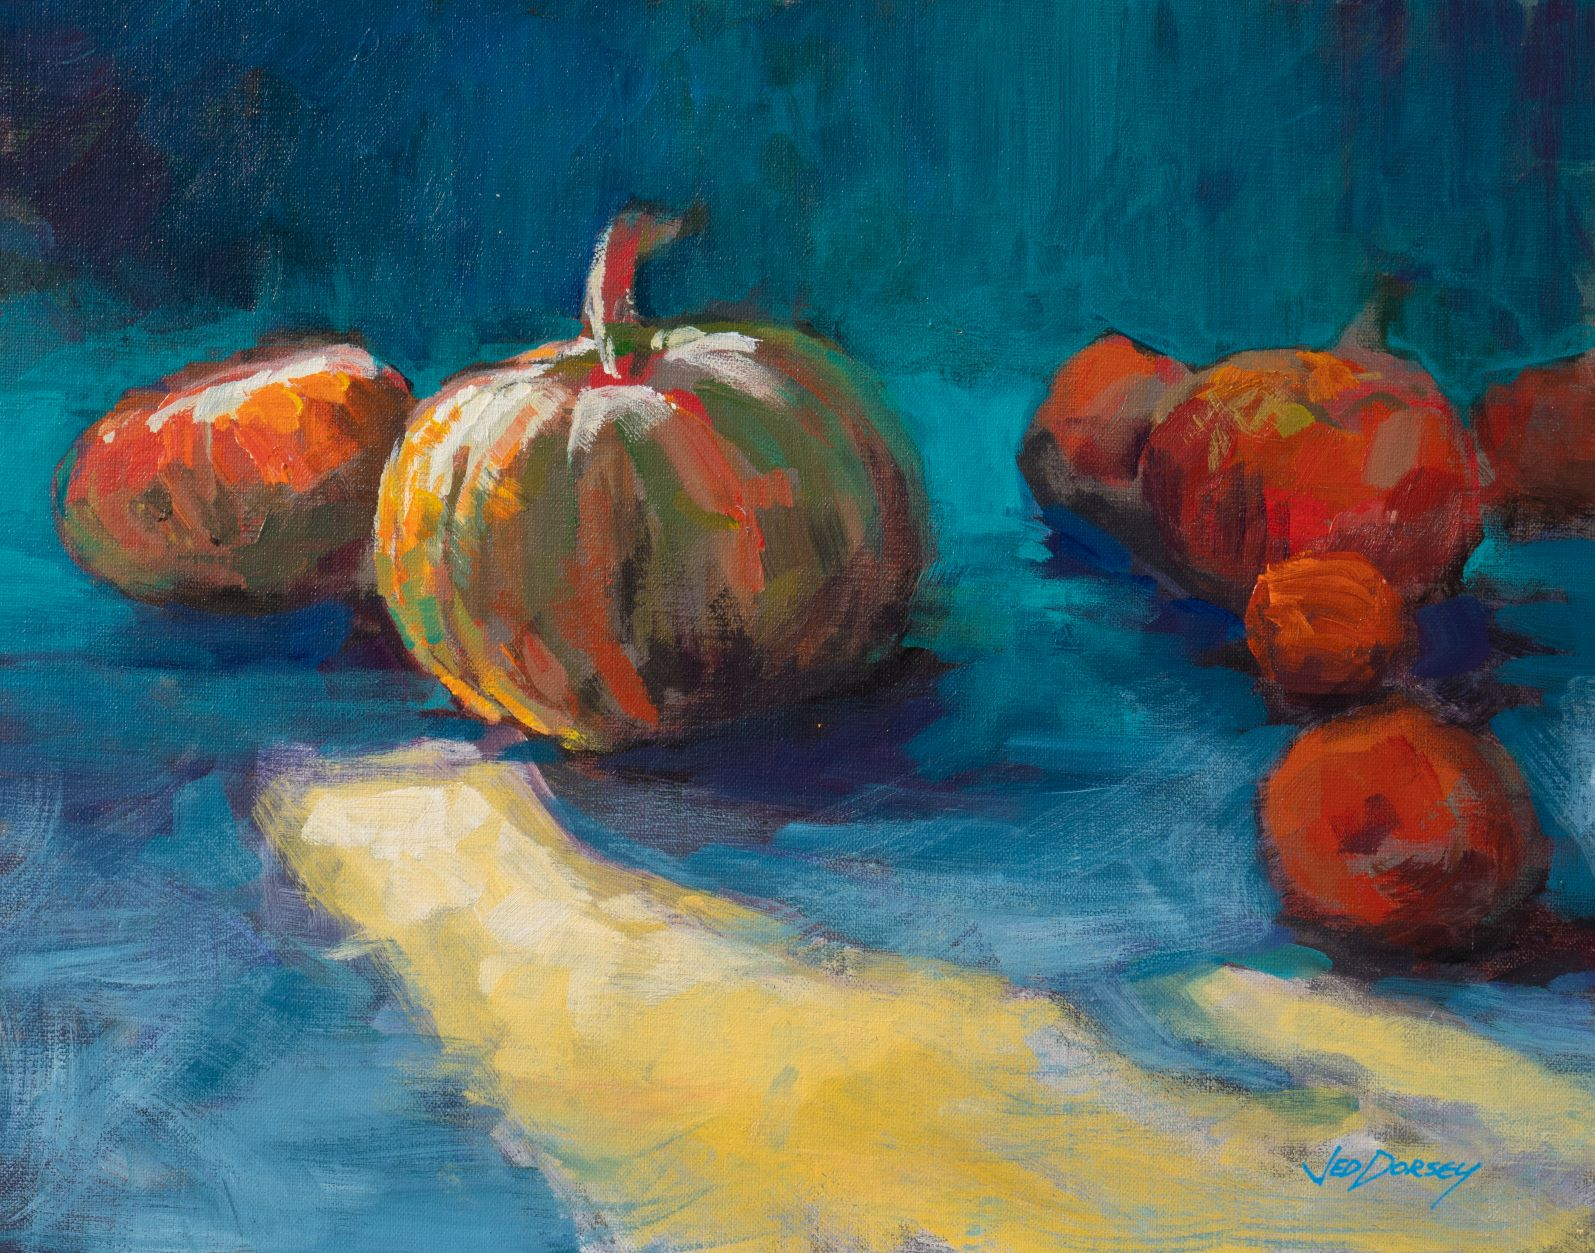 Acrylic painting of pumpkins